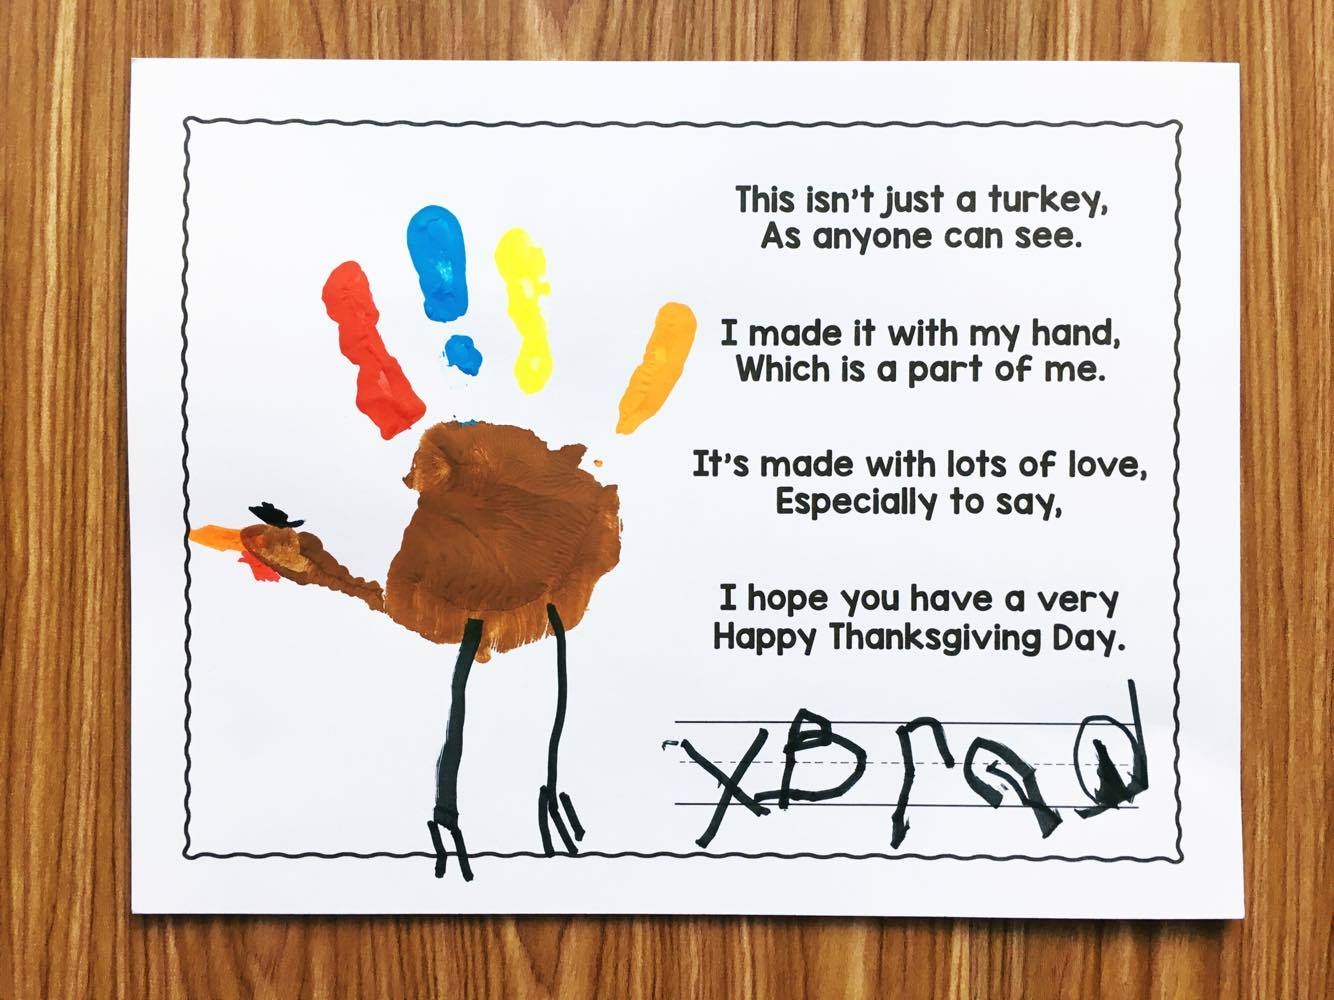 Free Turkey Handprint Poem Simply Kinder